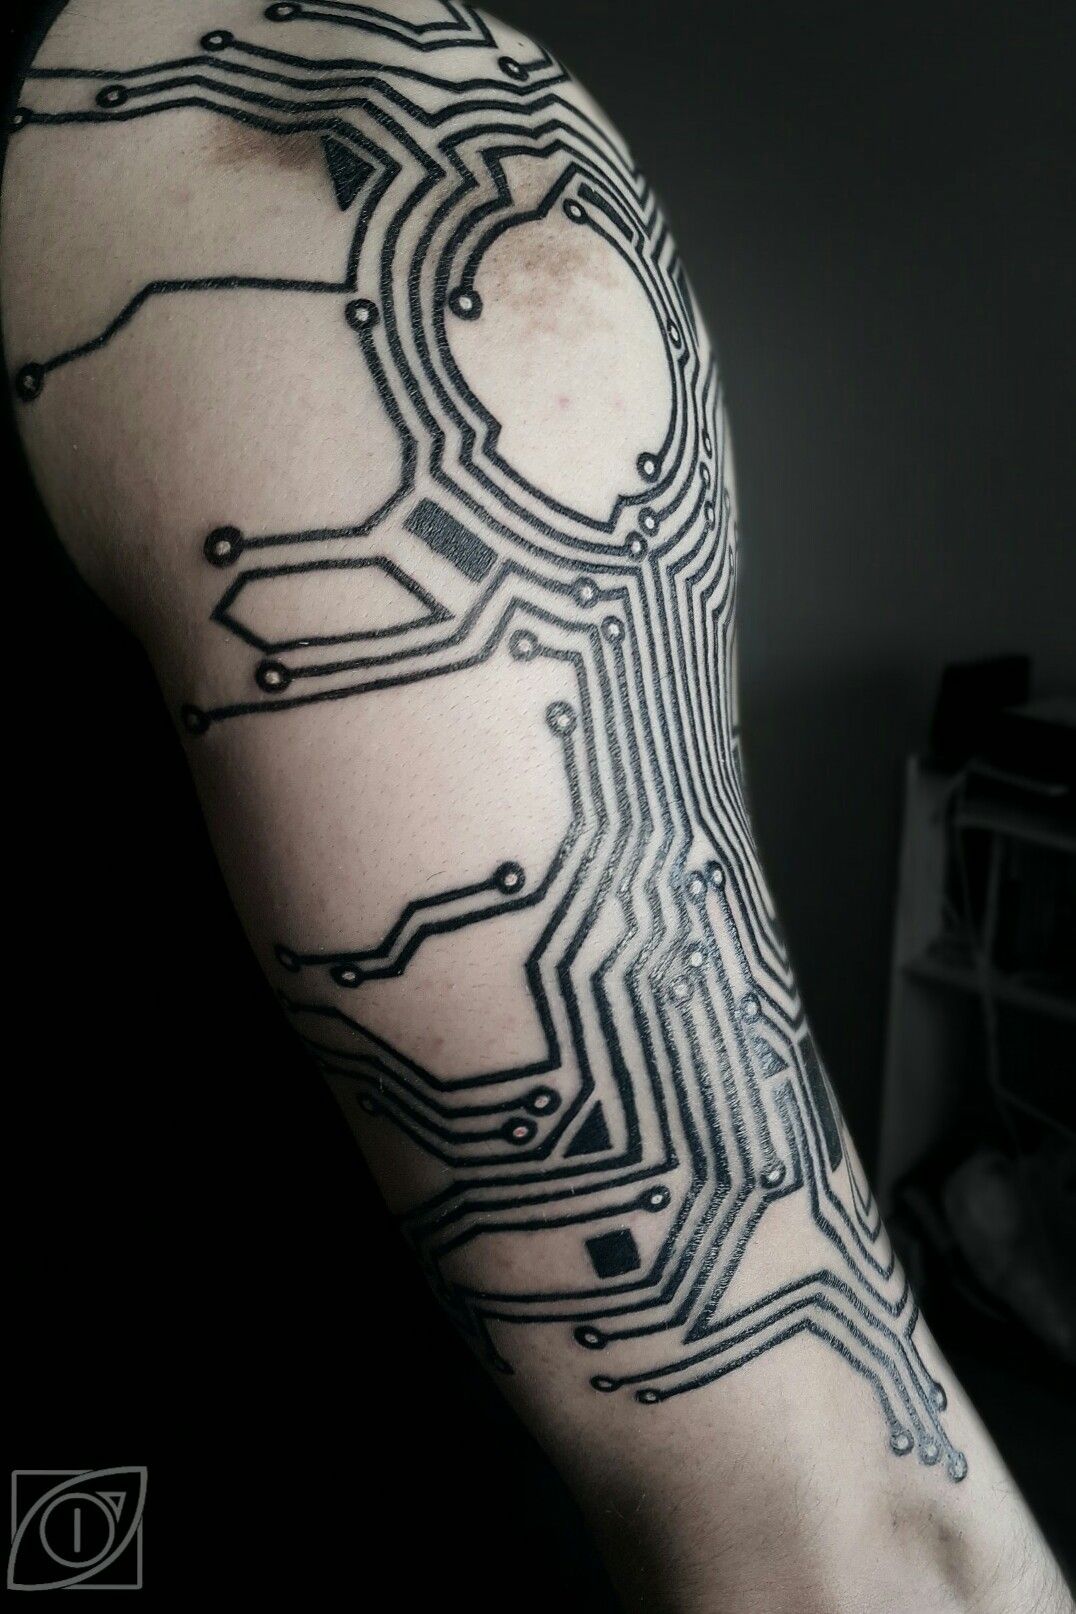 60 Circuit Board Tattoo Designs For Men  Electronic Ink Ideas  Tattoo  designs men Tattoos Circuit board tattoo